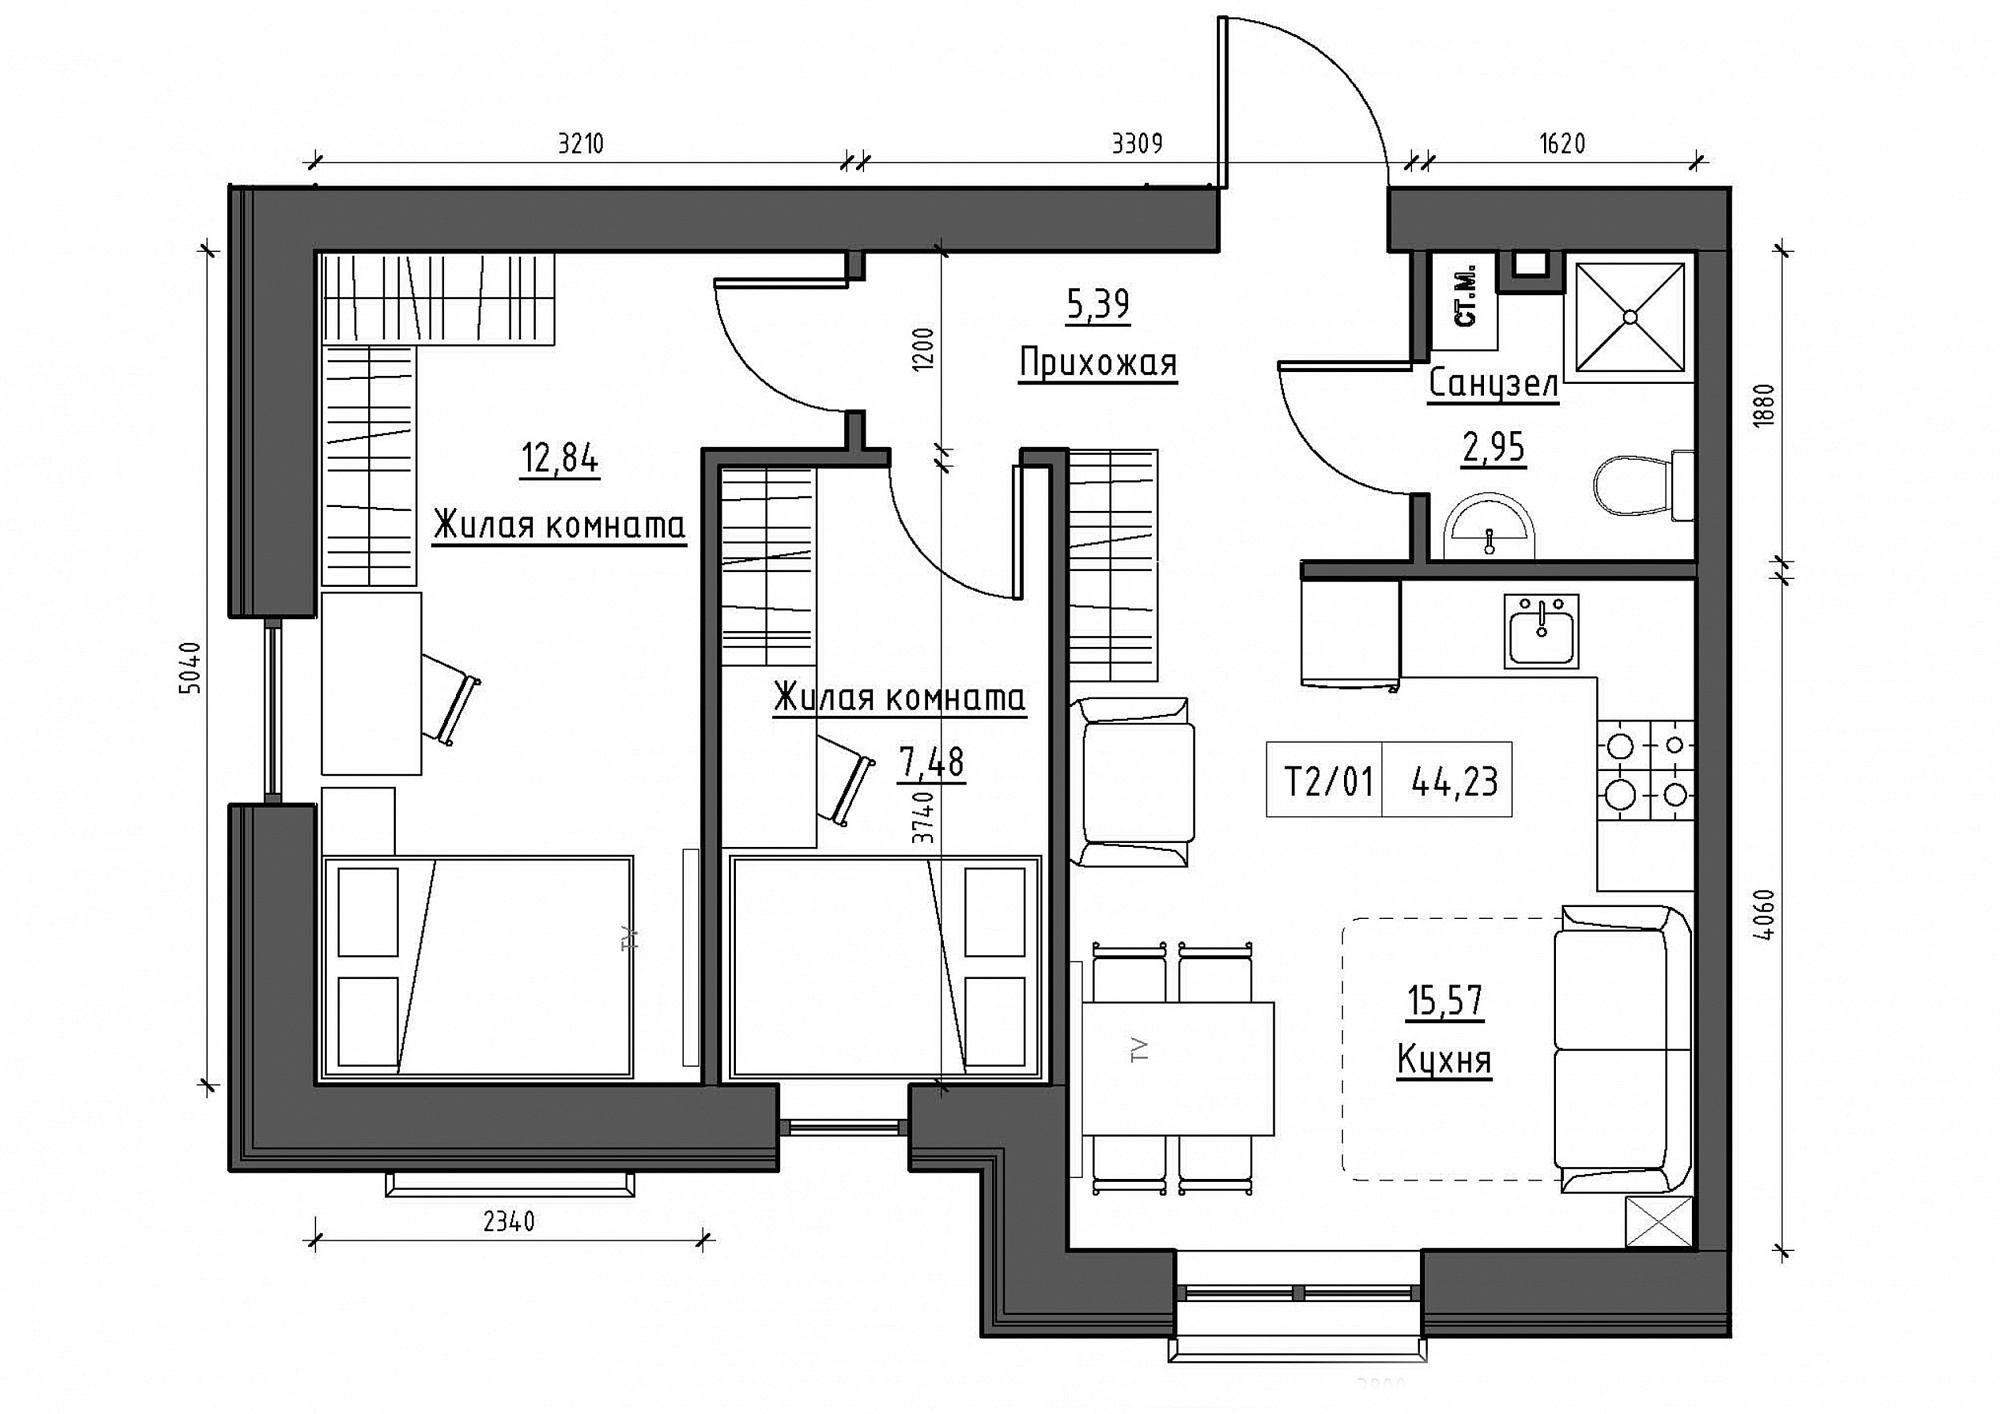 Planning 2-rm flats area 44.23m2, KS-012-01/0008.